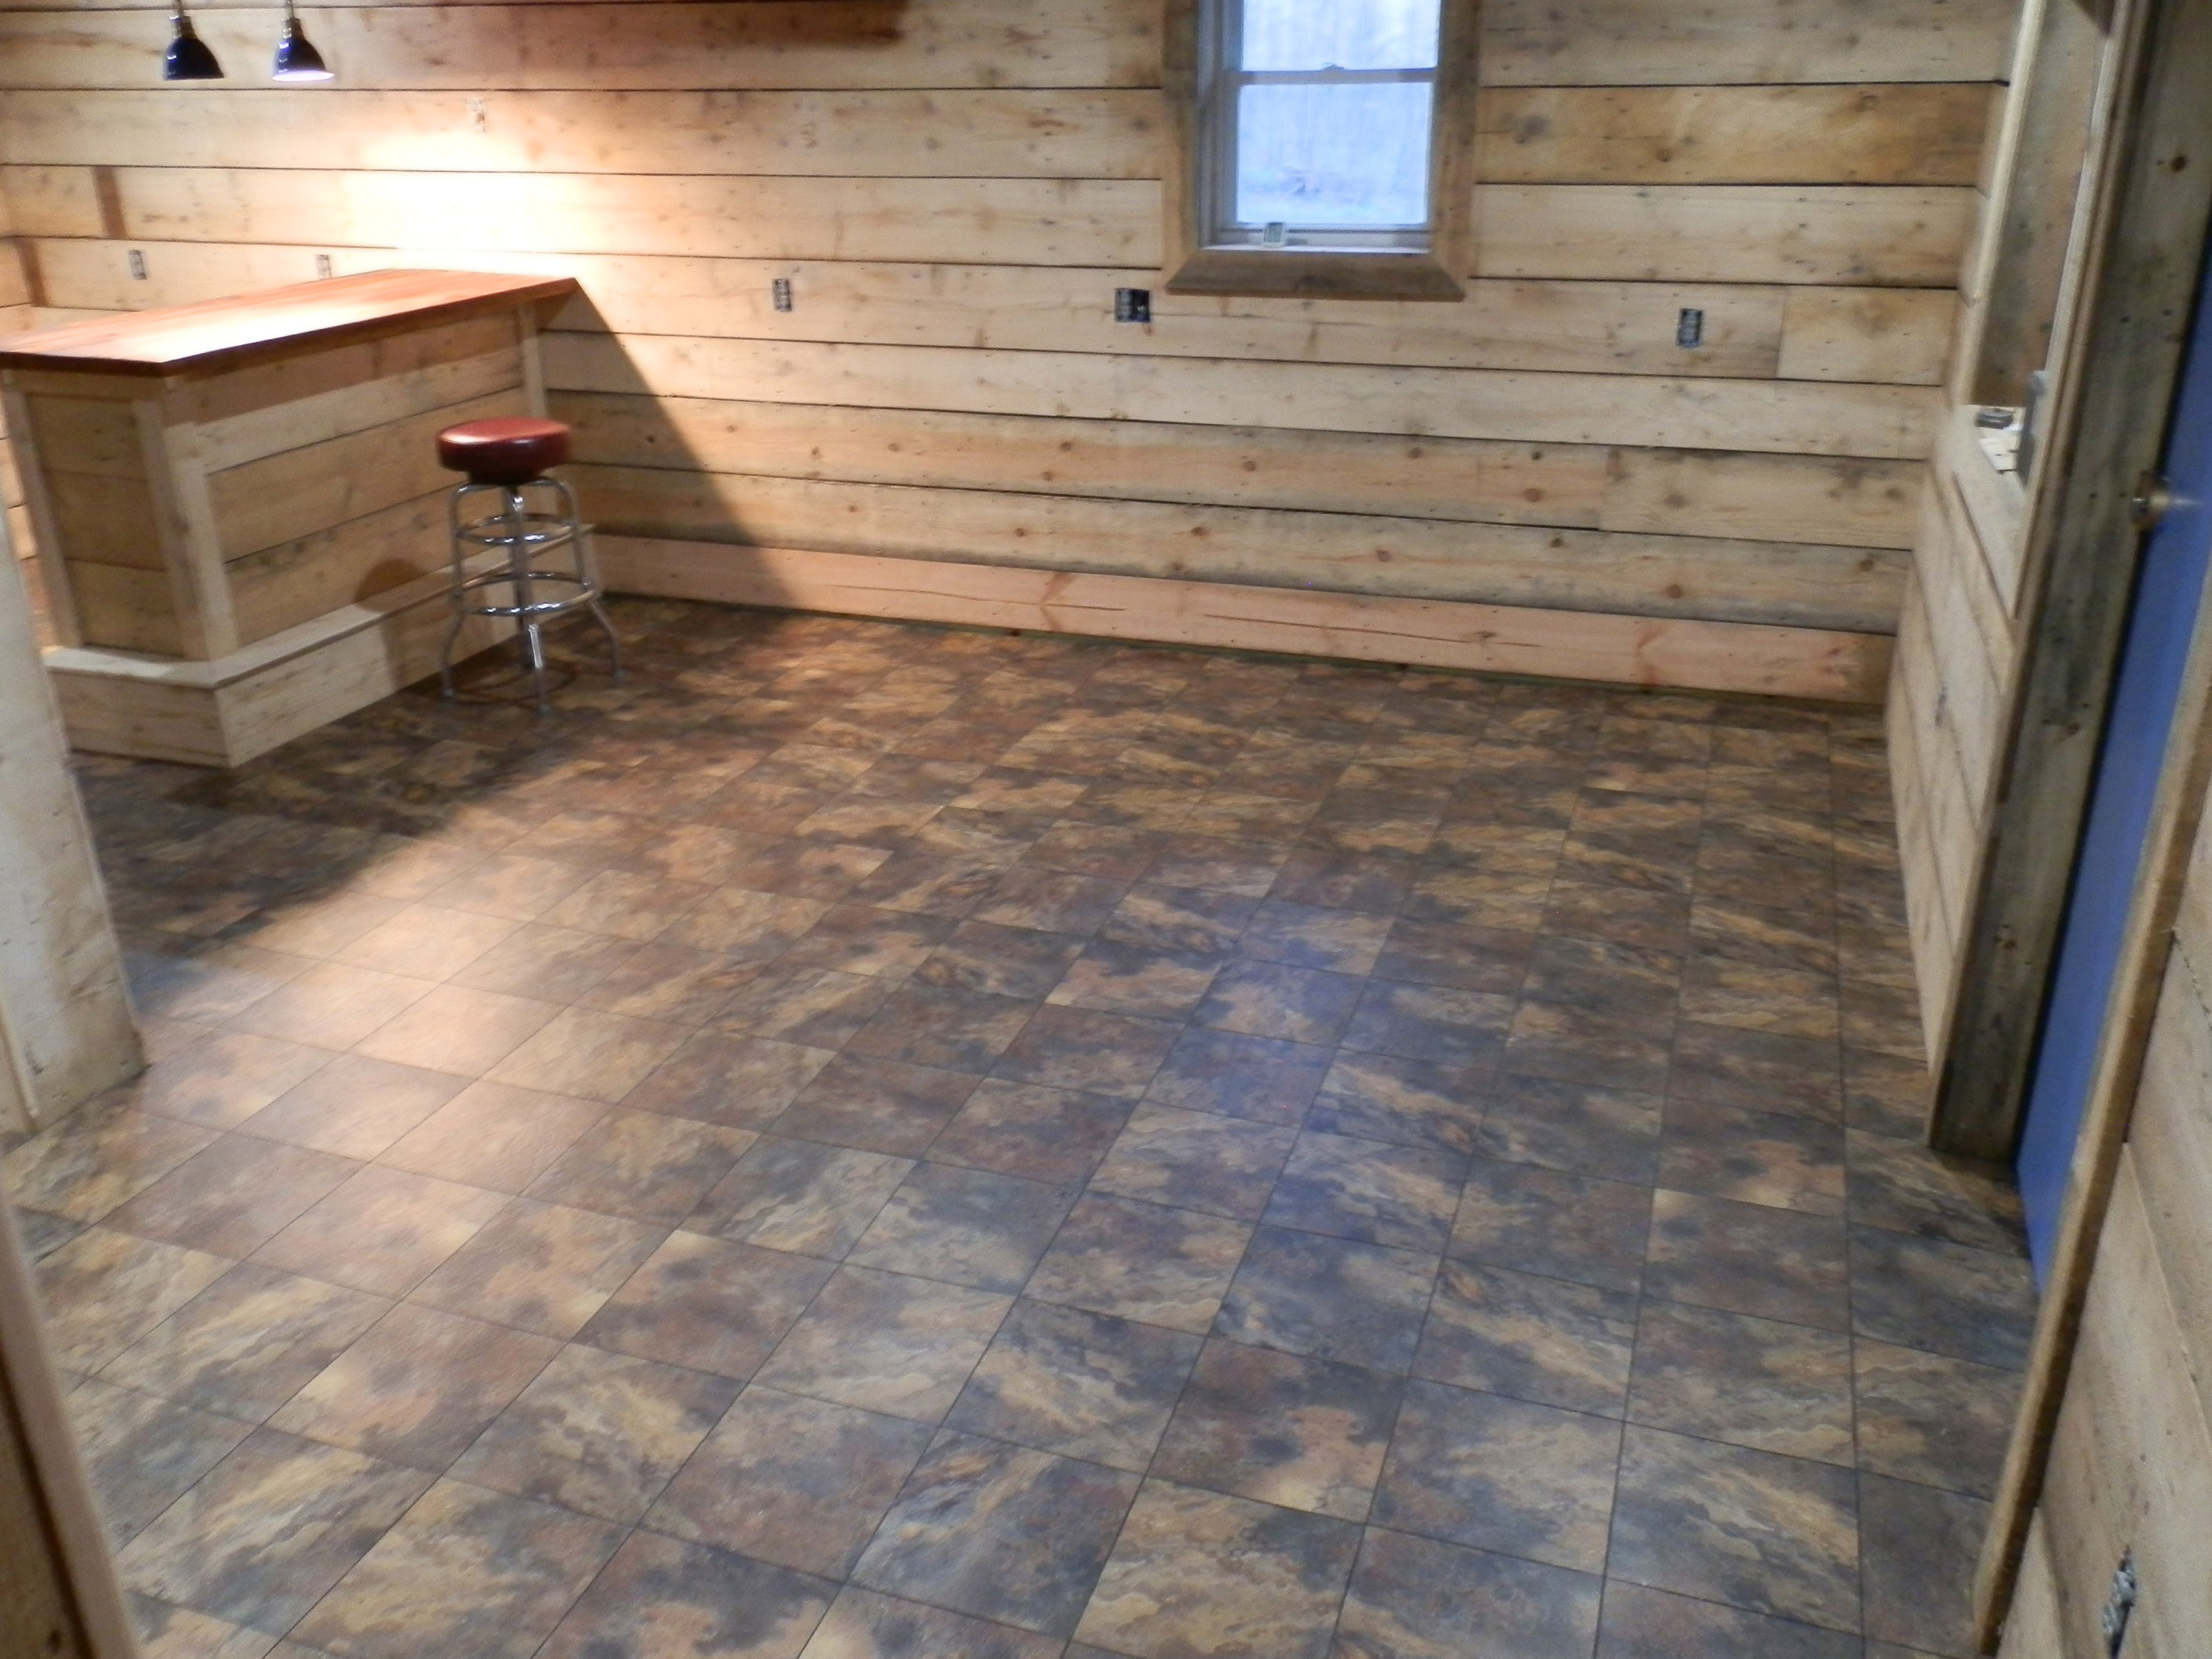 Max Tile Raised Floor Tile 5/8 Inch x 1x1 Ft. customer review photo 3